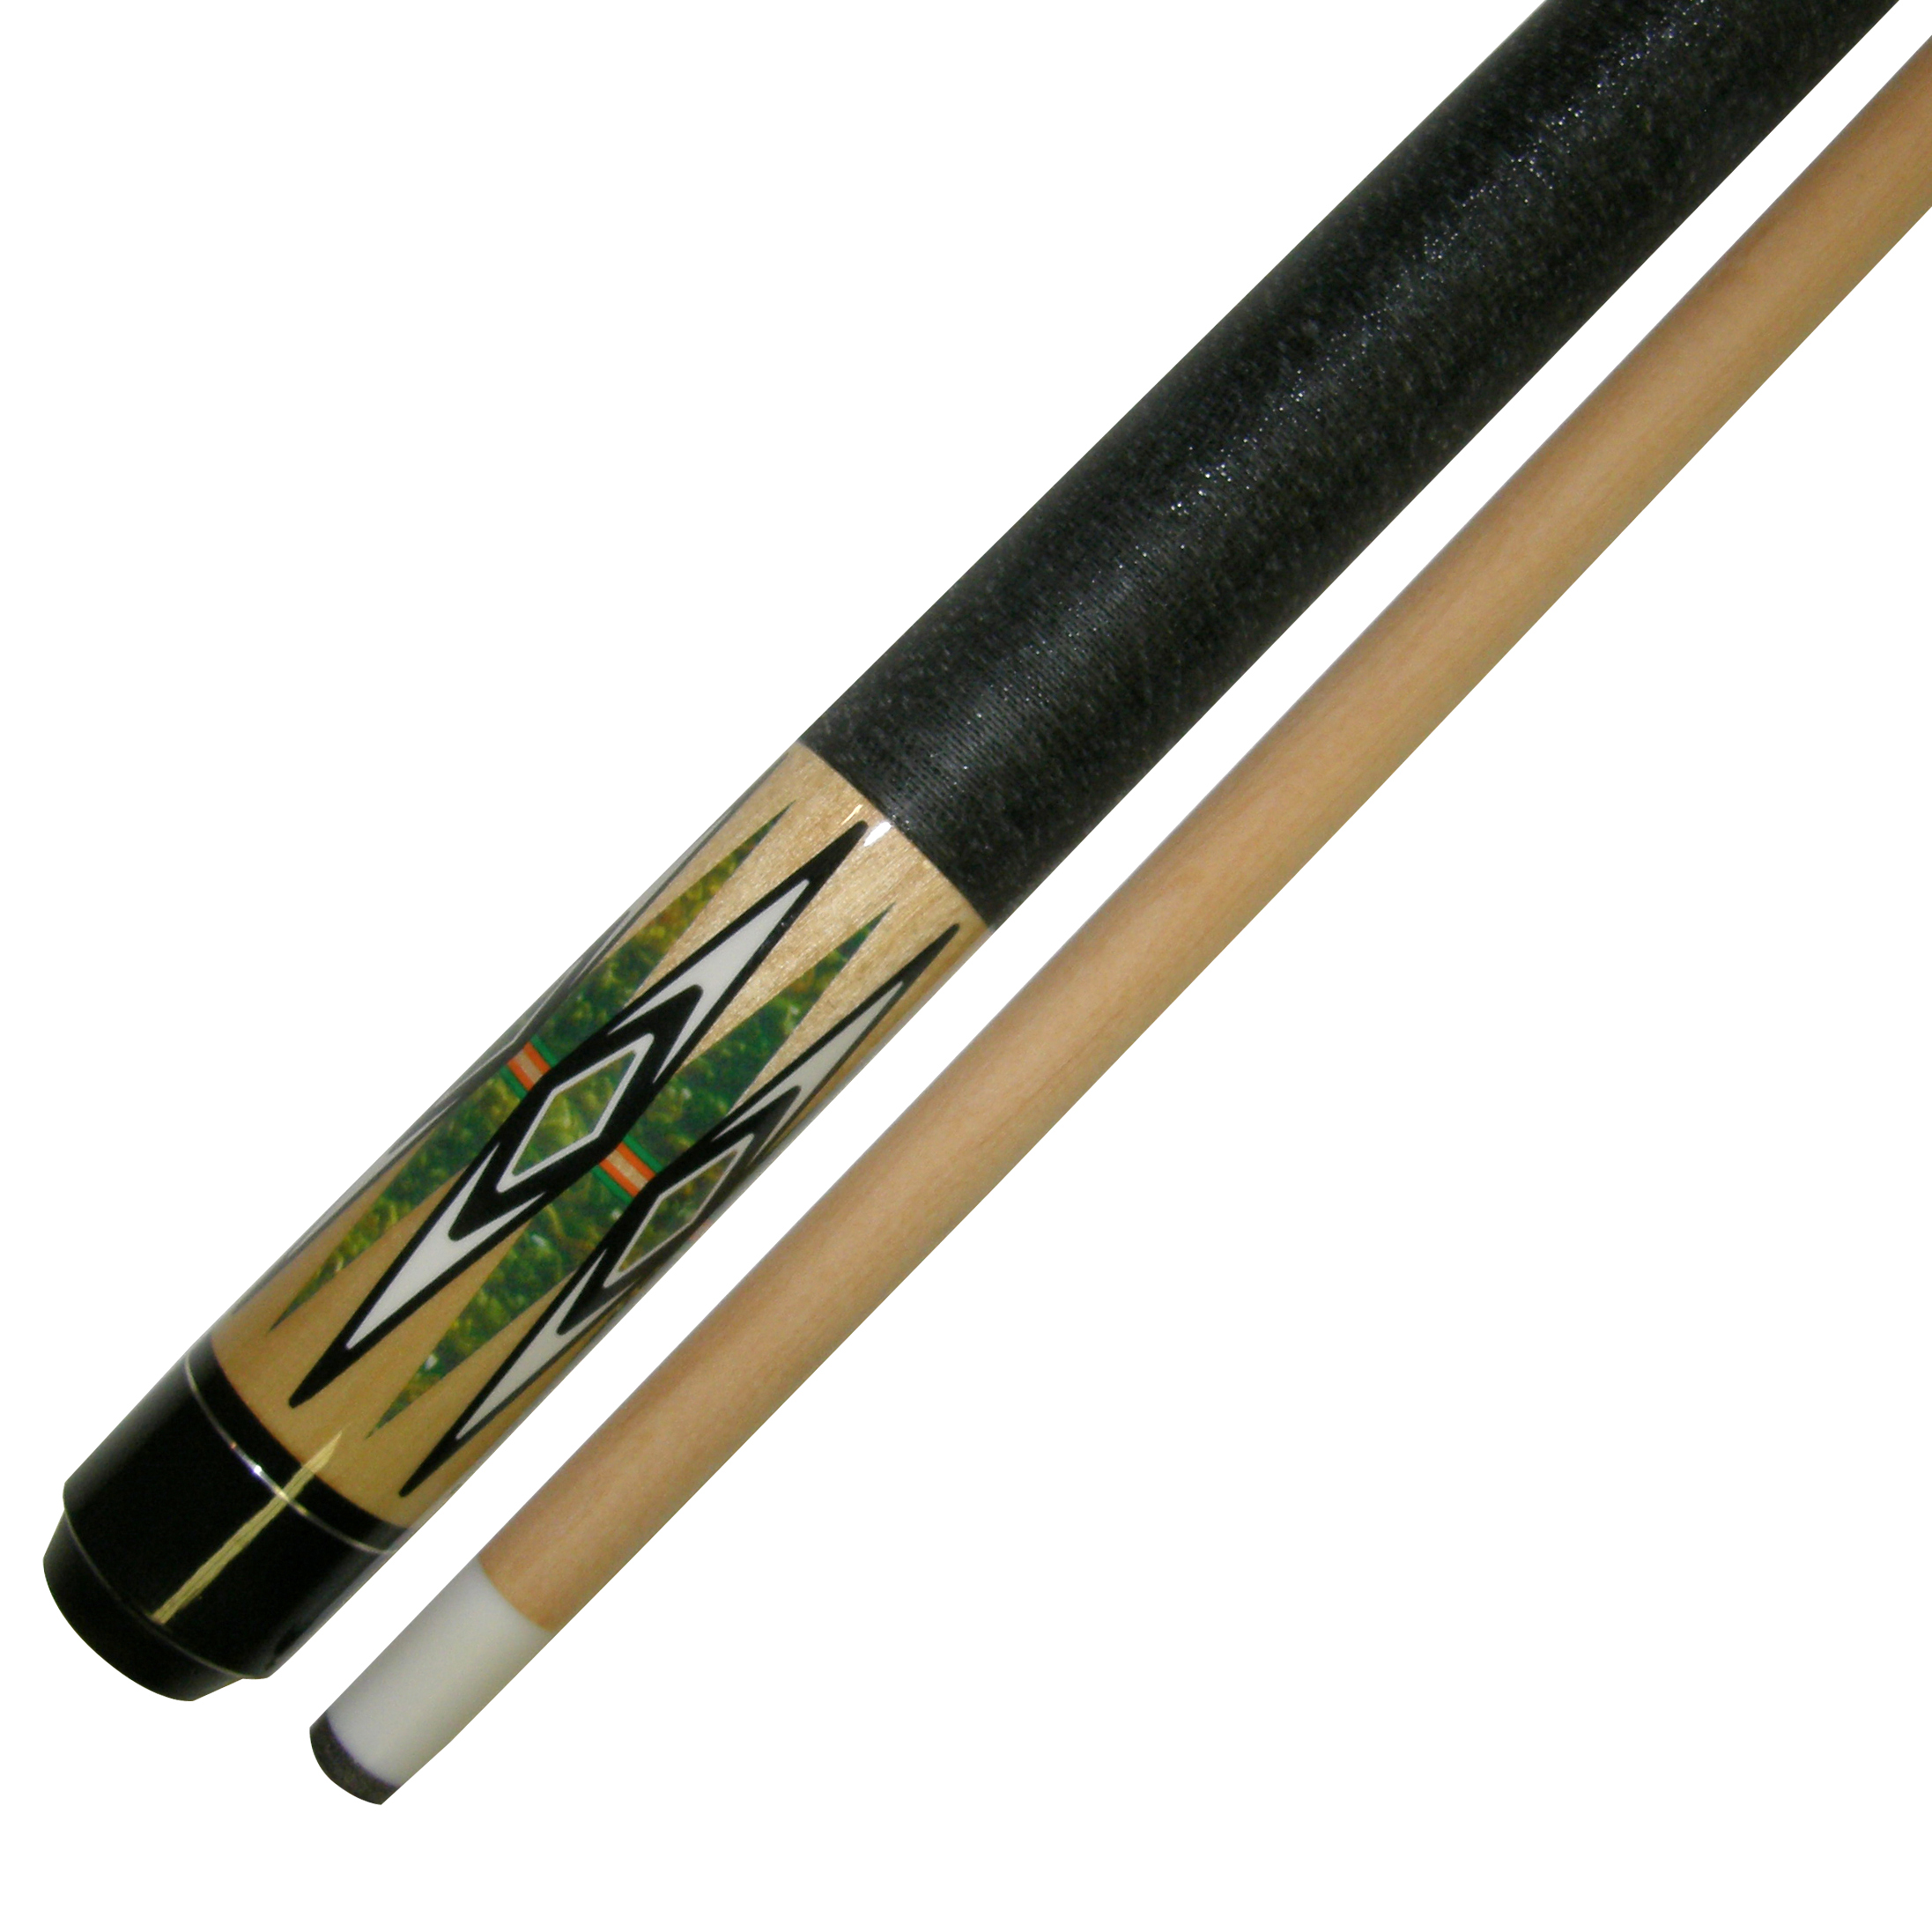 18-21 Oz Green 58/" 2-Piece Canadian Maple Hardwood Billiard Pool Cue Stick